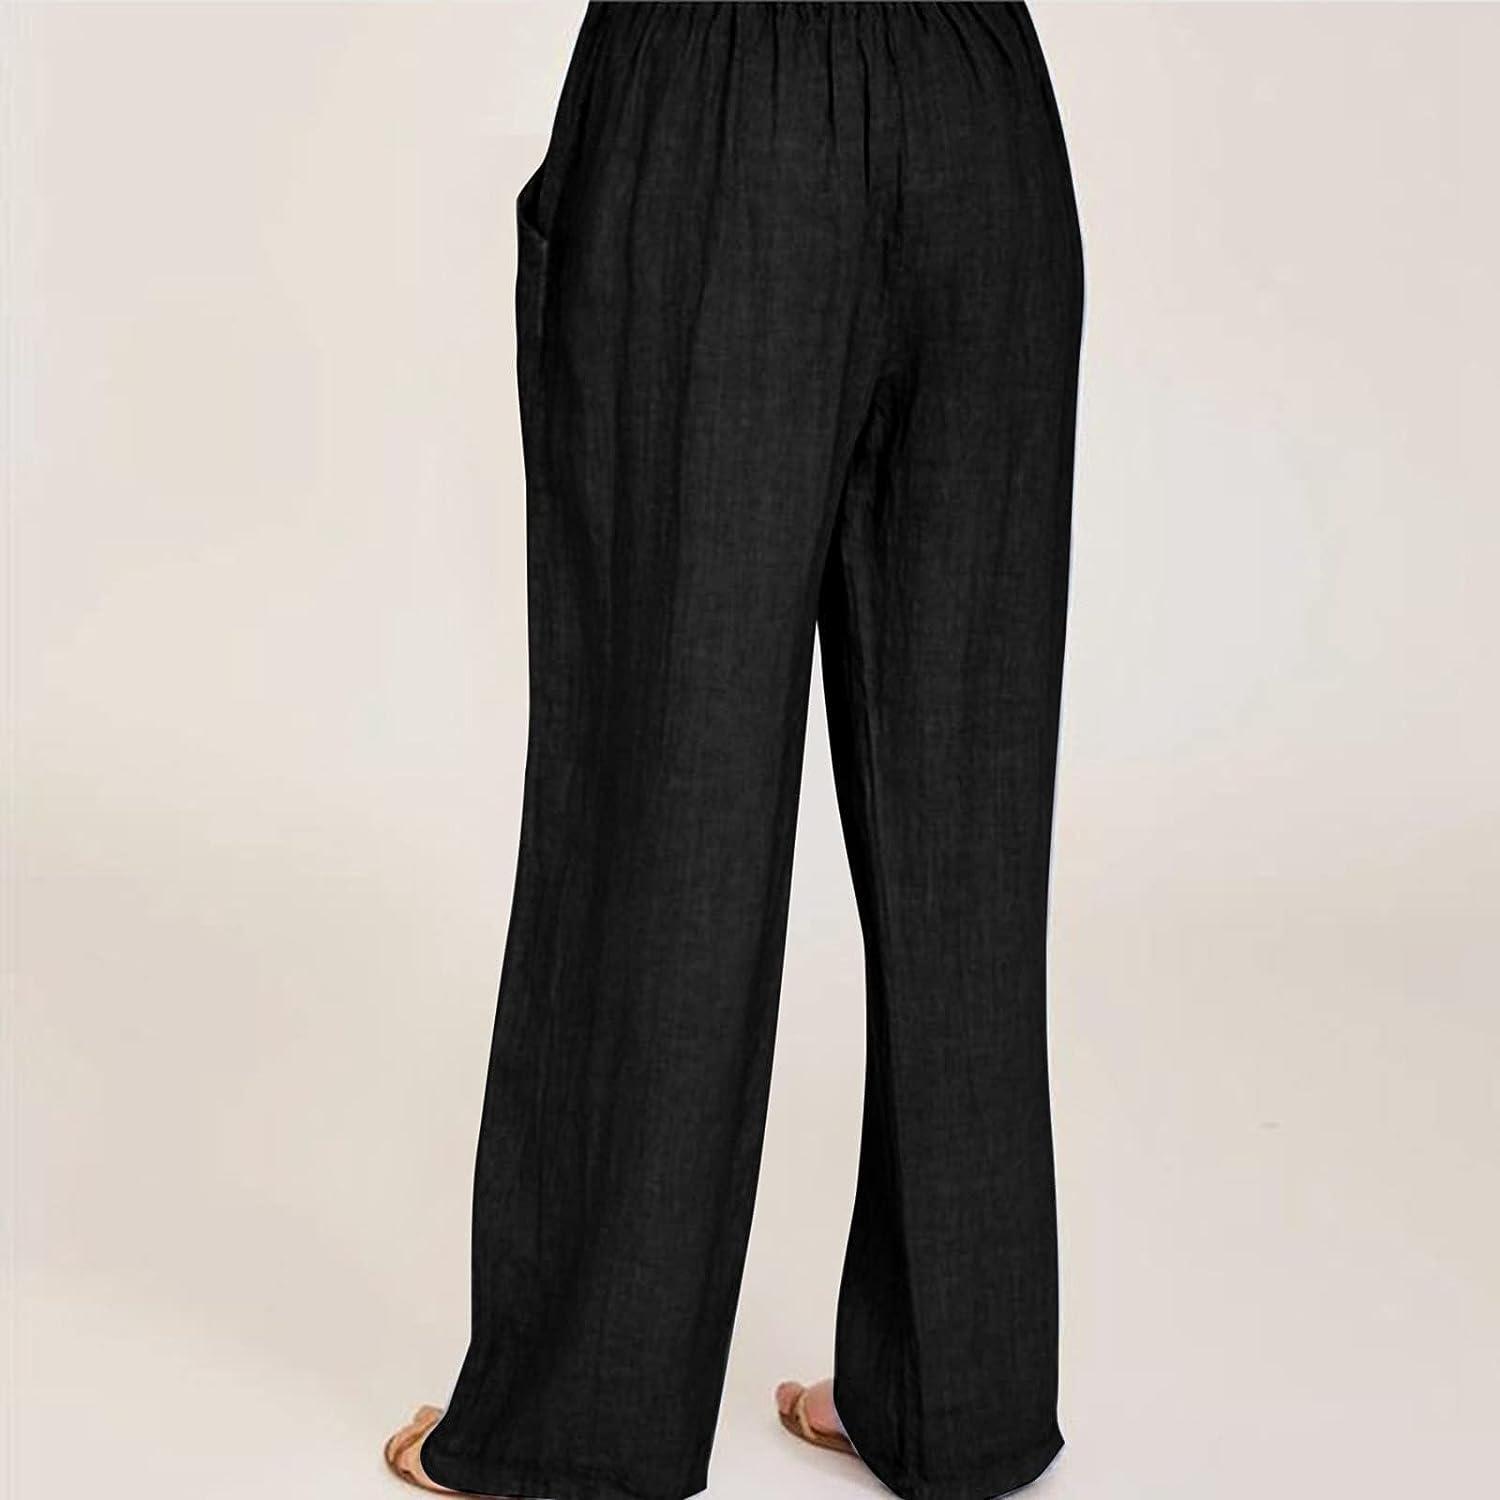 Pants Clearance Trendy Casual Women Printed Span Ladies High Waist Keep  Warm Long Pants Black Xxl 